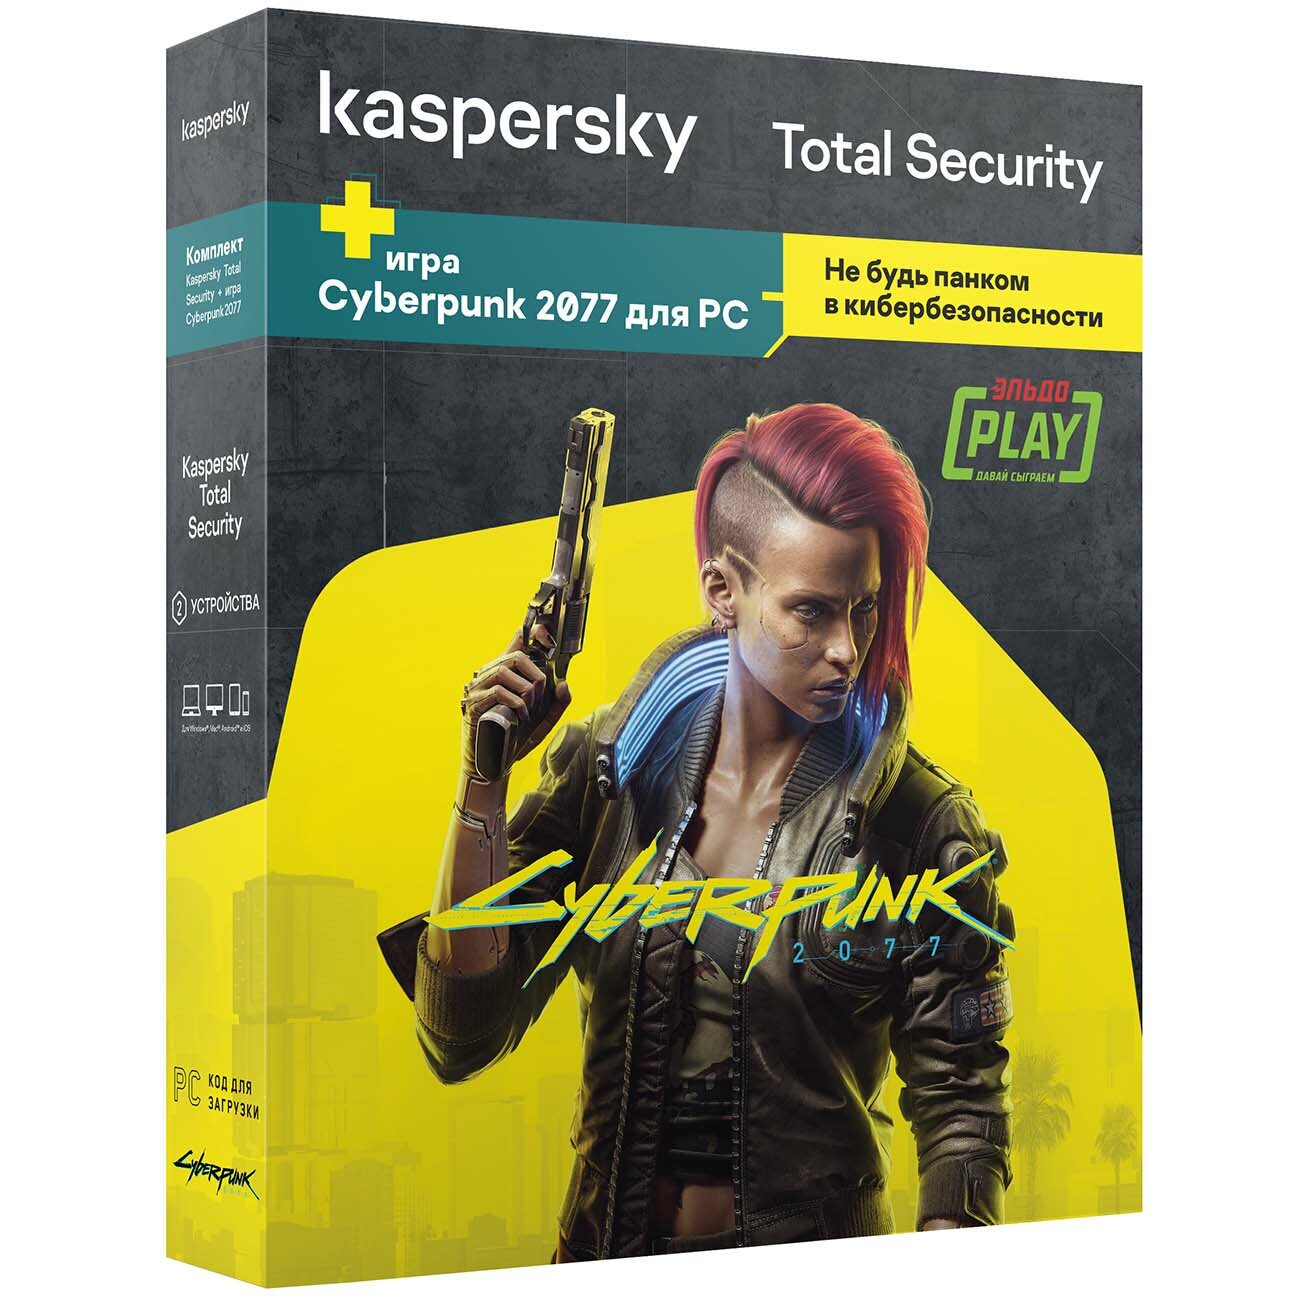 Антивирус Kaspersky Total Security 2 устр. 1 год+игра Cyberpunk 2077 Kaspersky